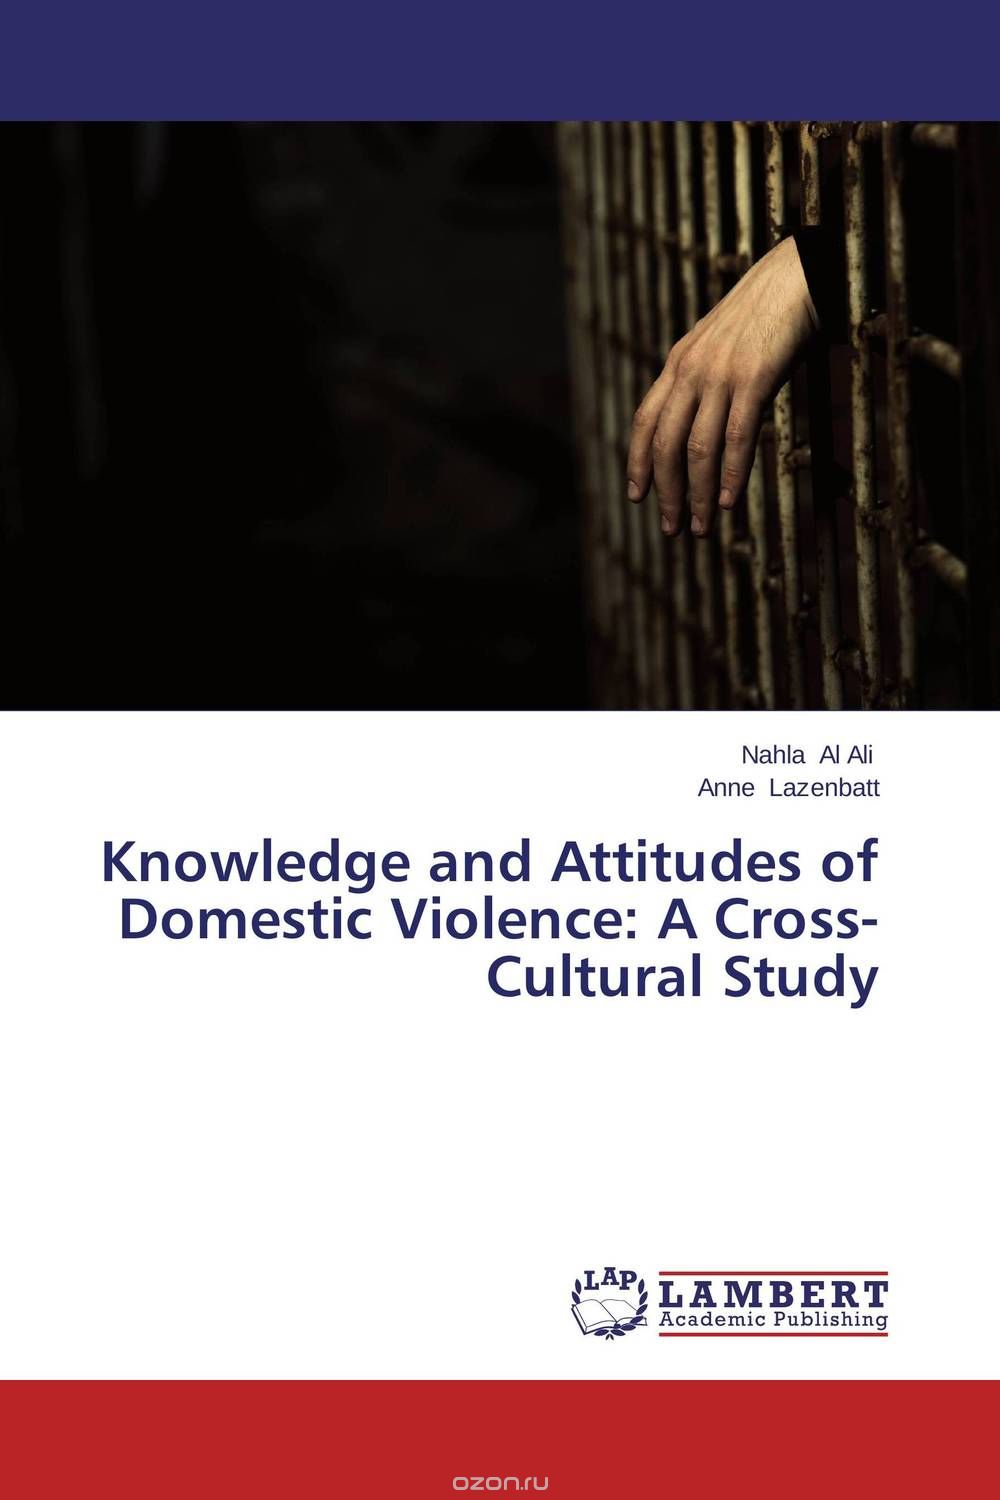 Скачать книгу "Knowledge and Attitudes of Domestic Violence: A Cross-Cultural Study"